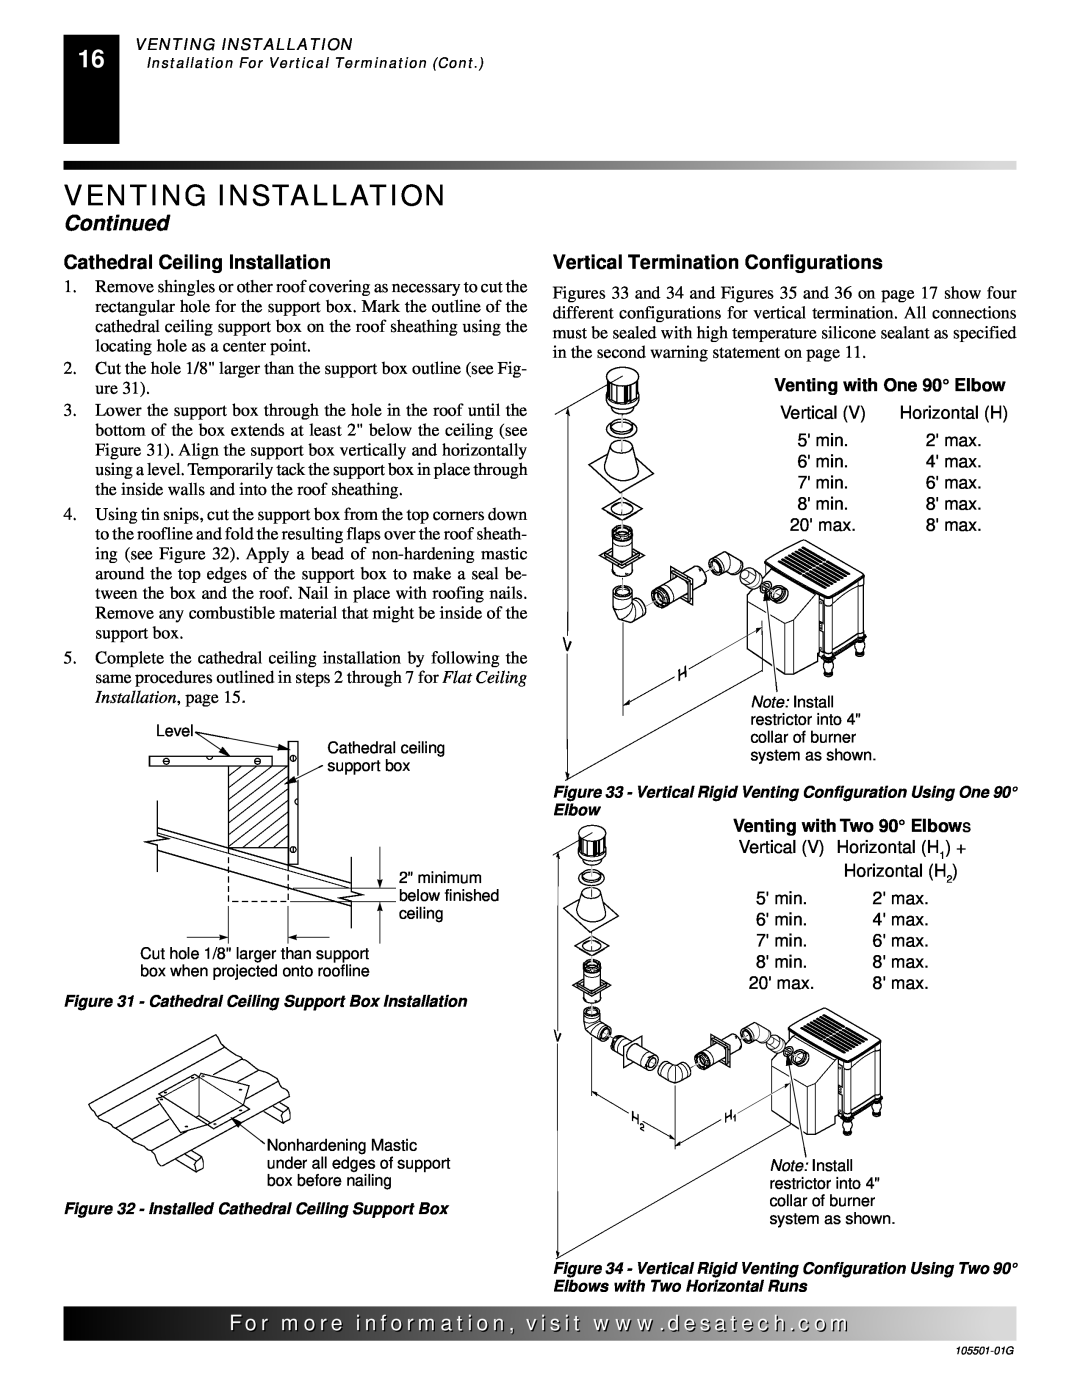 Desa Tech CDVBNC, CDVBPC manual Continued, For..com, Cathedral Ceiling Installation, Vertical Termination Configurations 